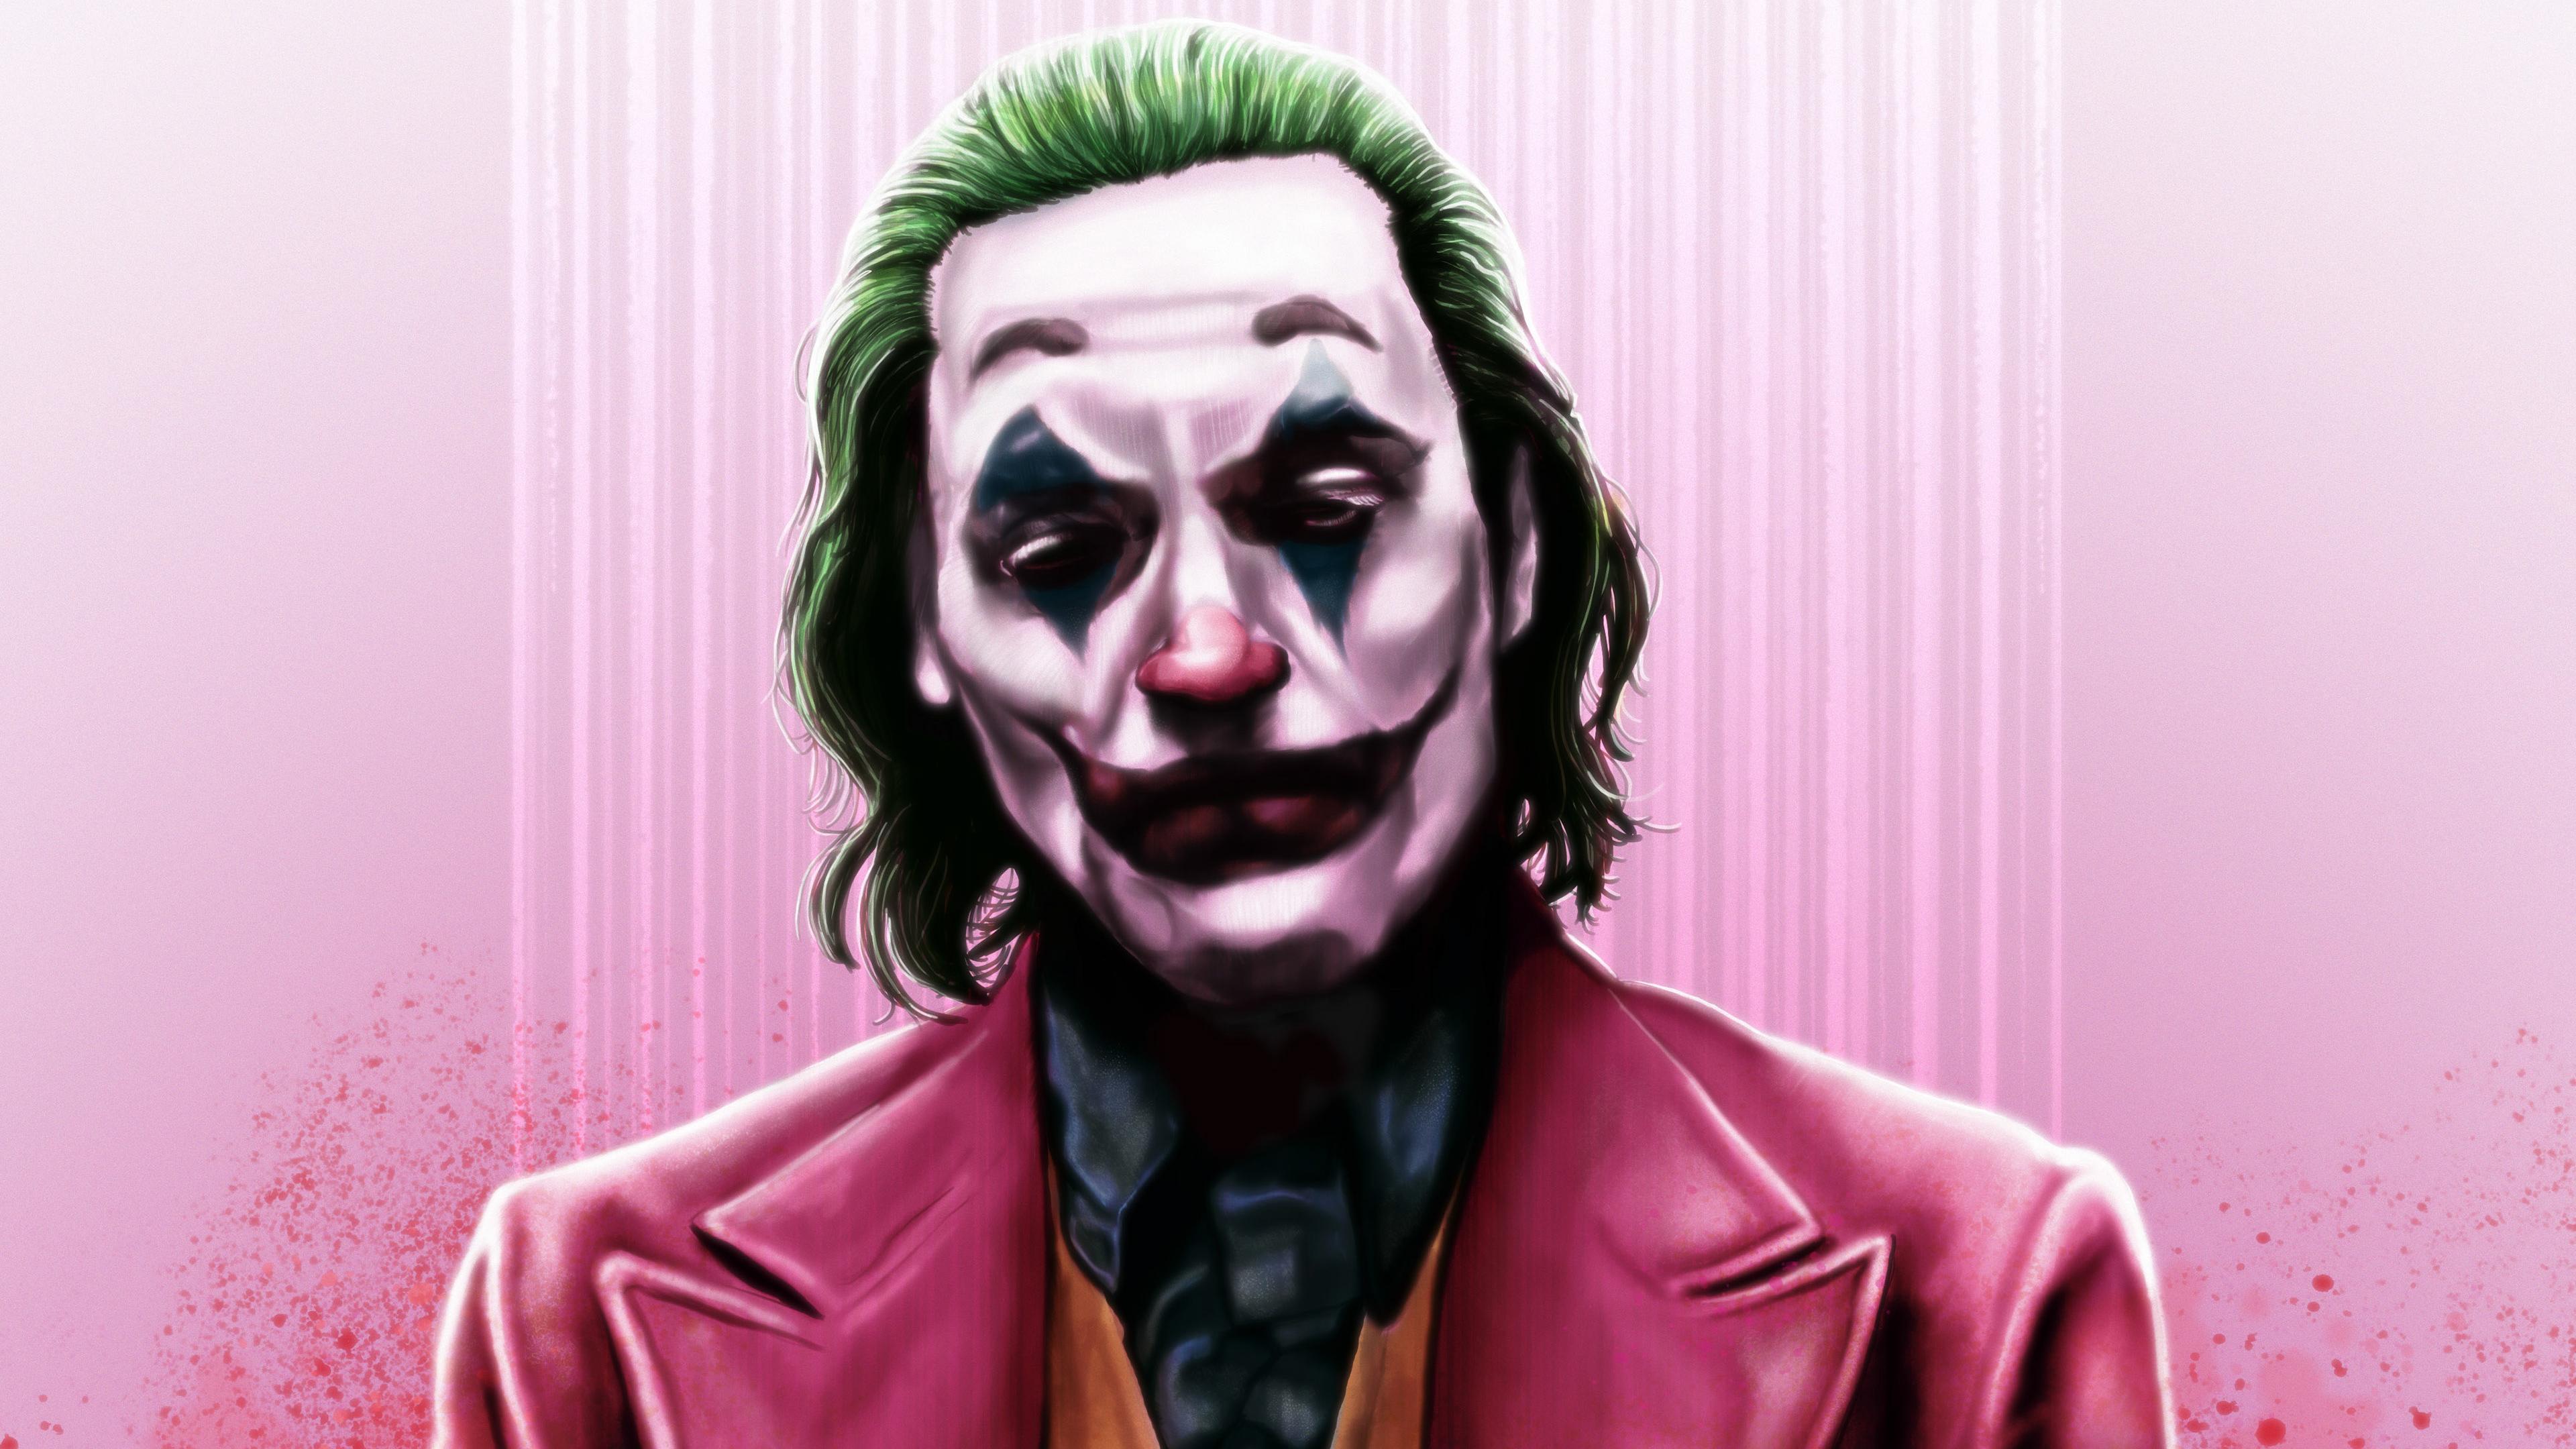 Wallpaper 4k Joker Joaquin Phoenix 4k Art 4k Wallpaper, Artwork